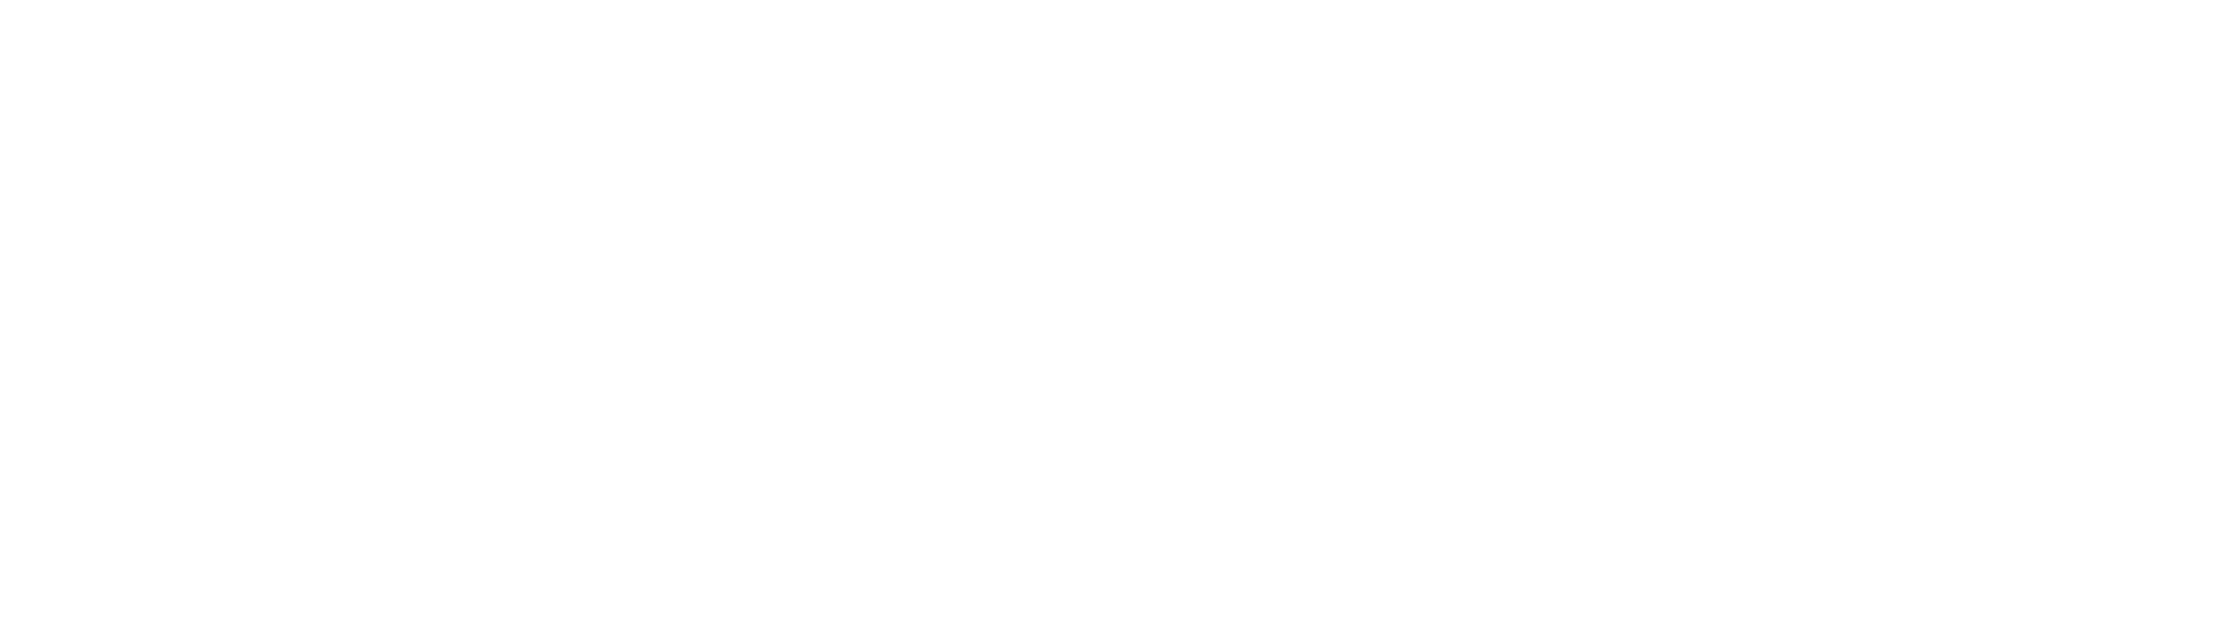 Schroeder Investment Partners Inc.